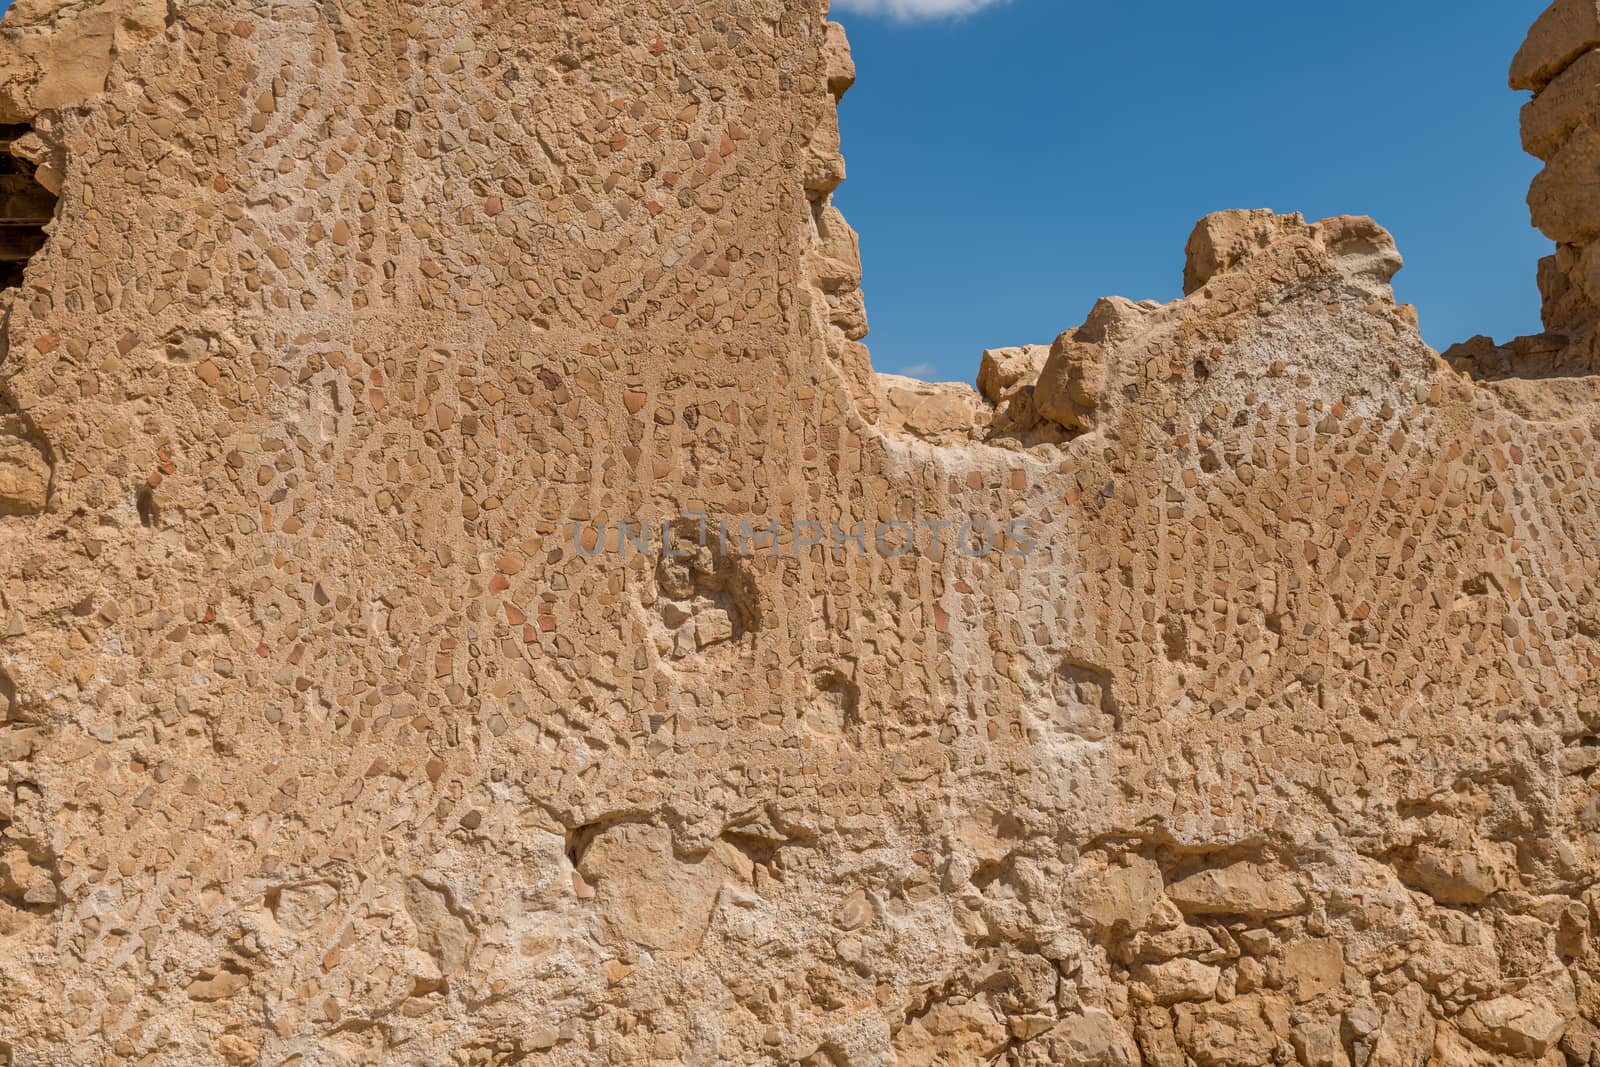 Ruins of the ancient Masada by compuinfoto